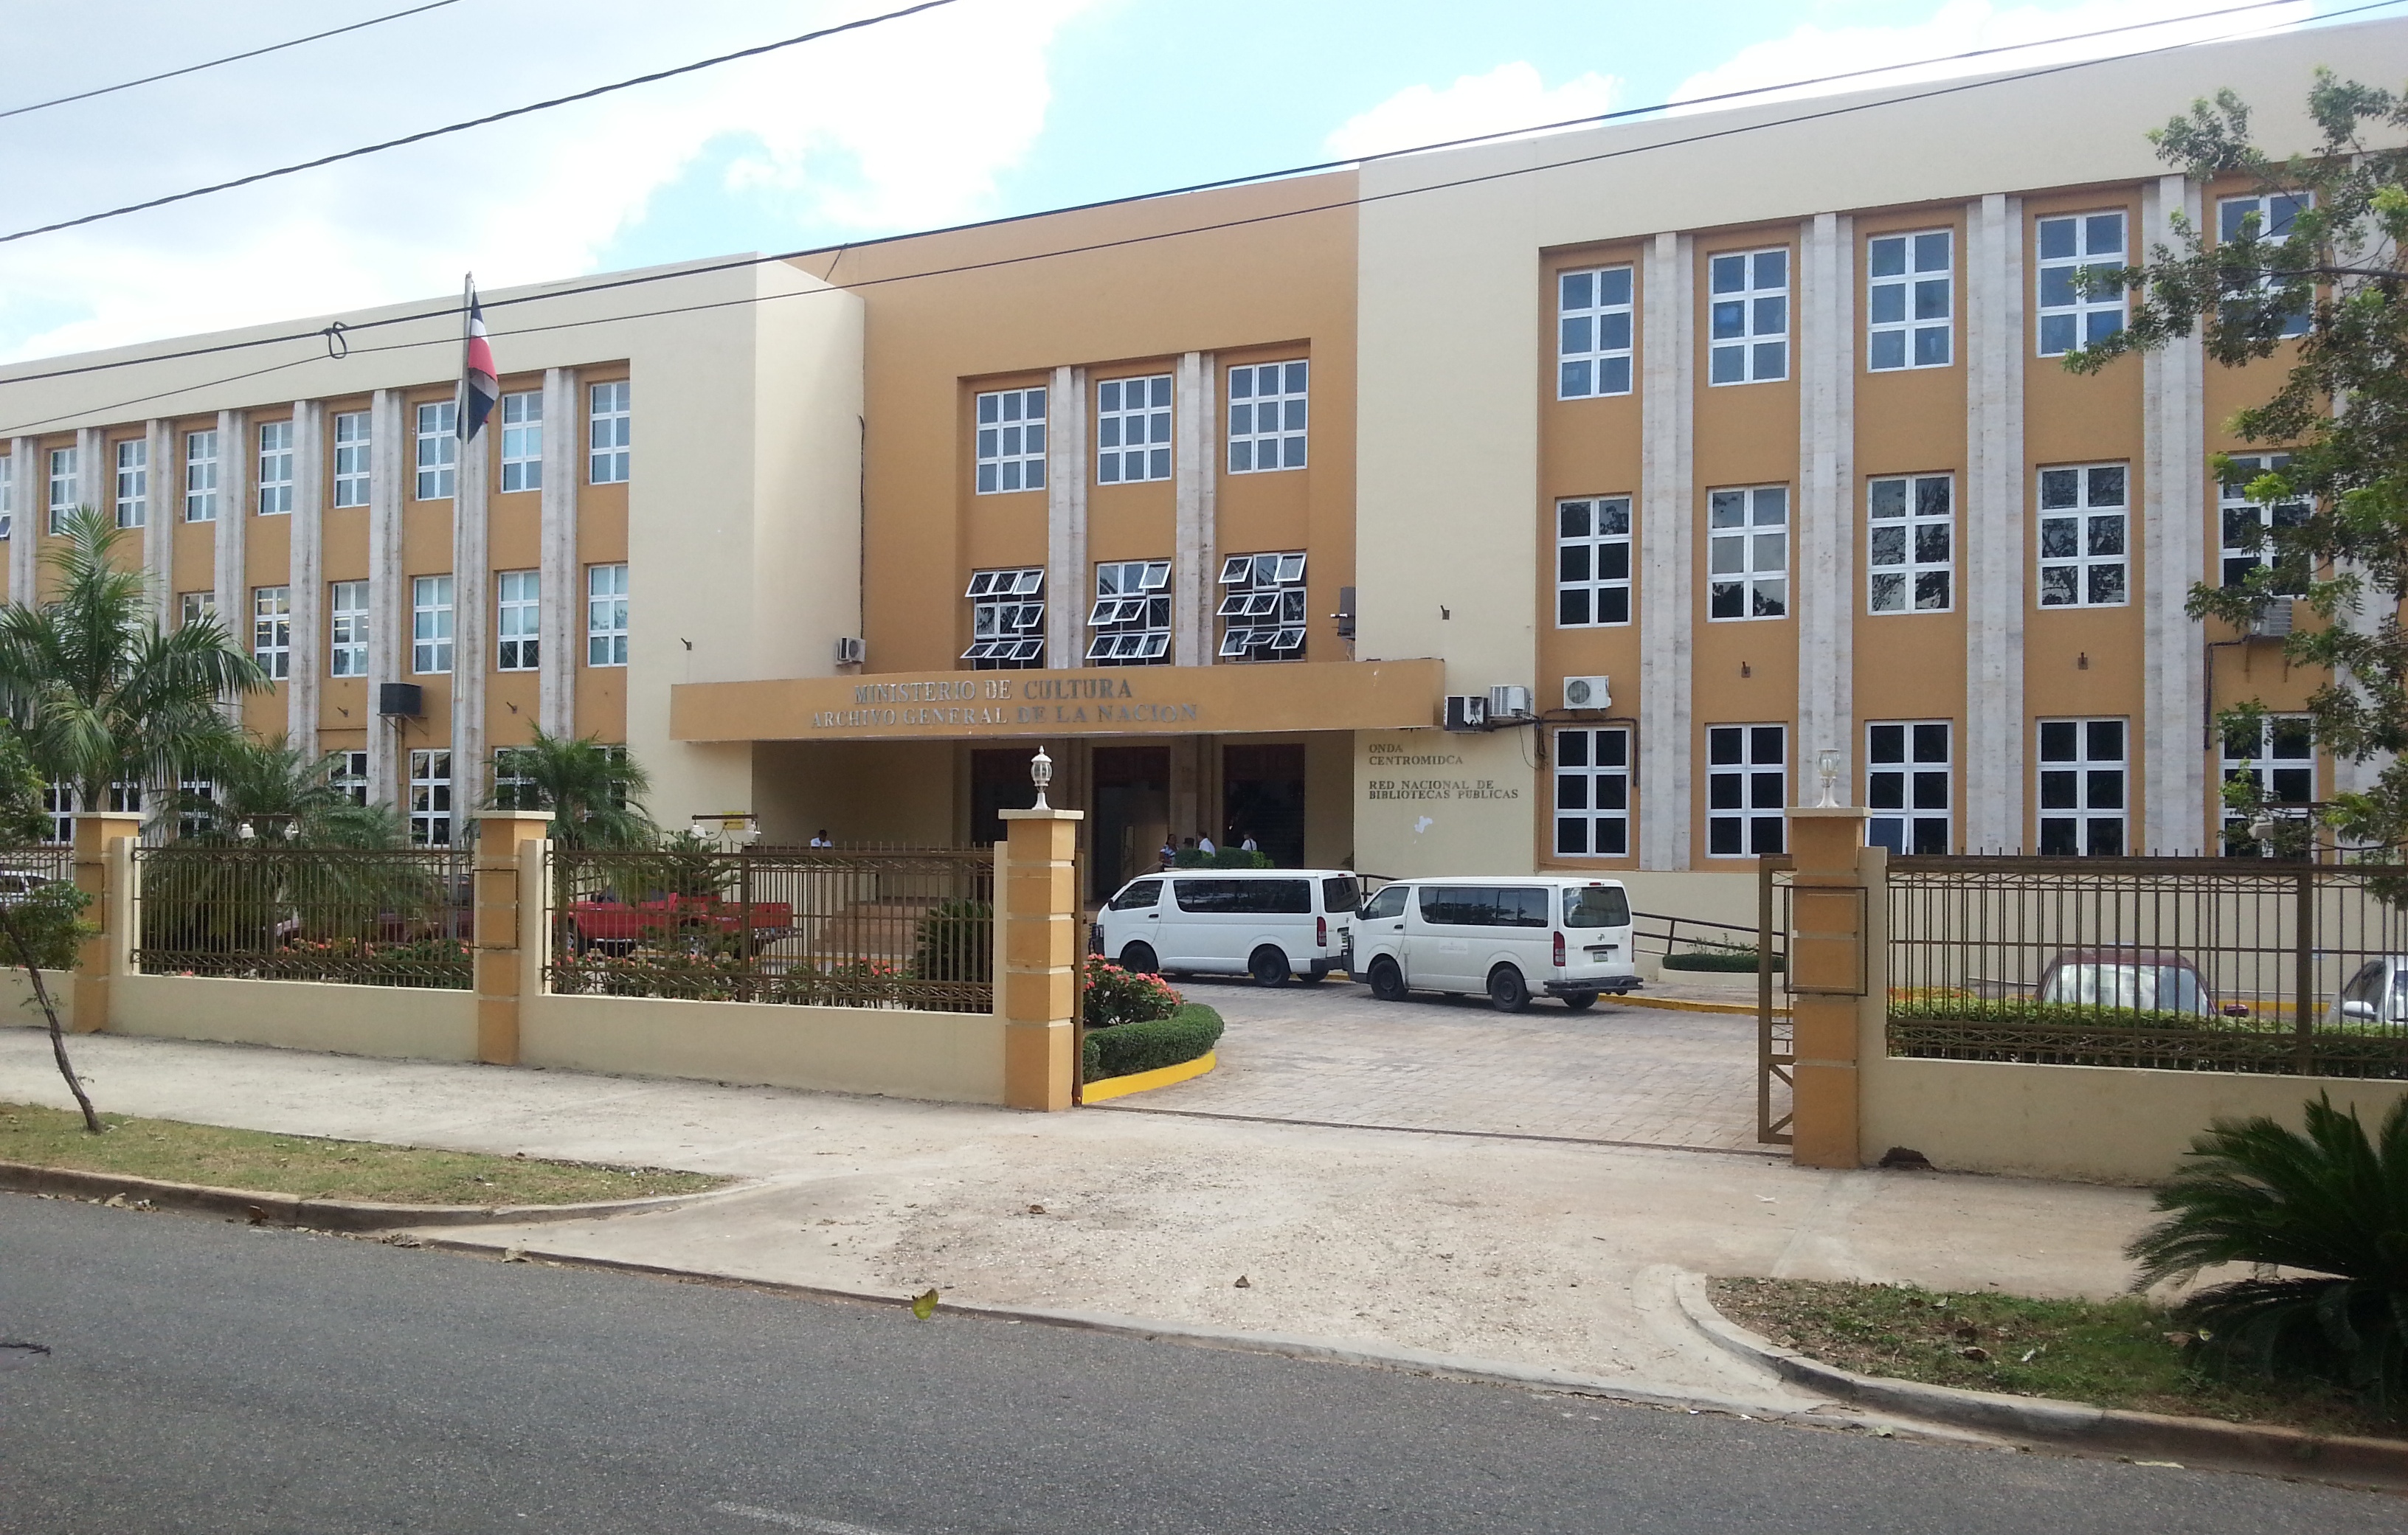 General Archive of The Nation in Santo Domingo